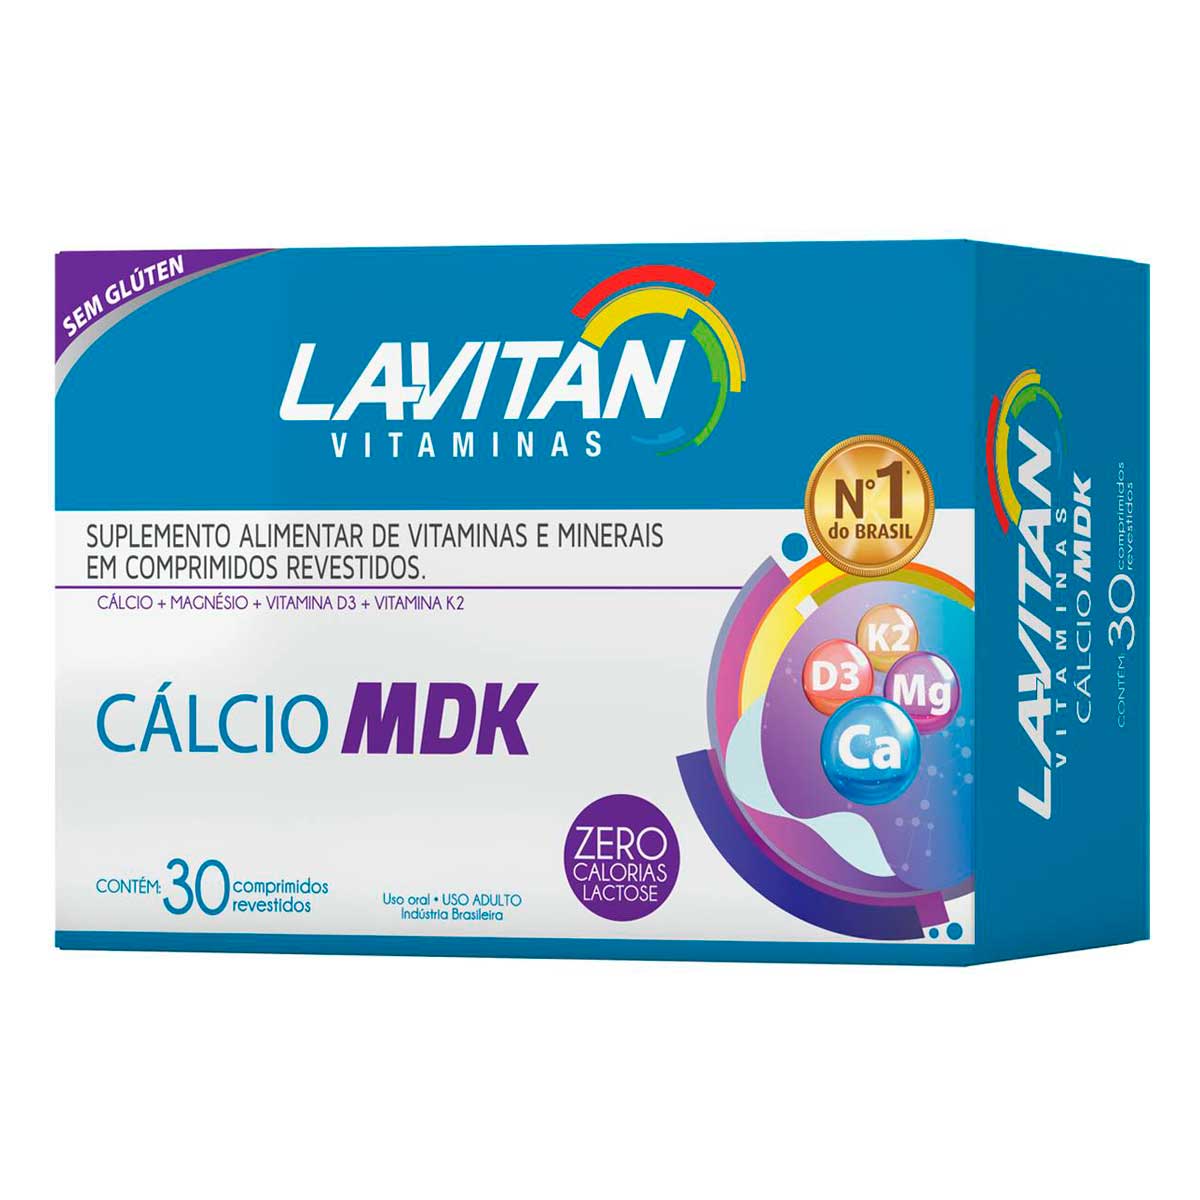 Lavitan Vitaminas Cálcio MDK Suplemento Alimentar de Vitaminas e Mineiras com 30 Cápsulas Cimed